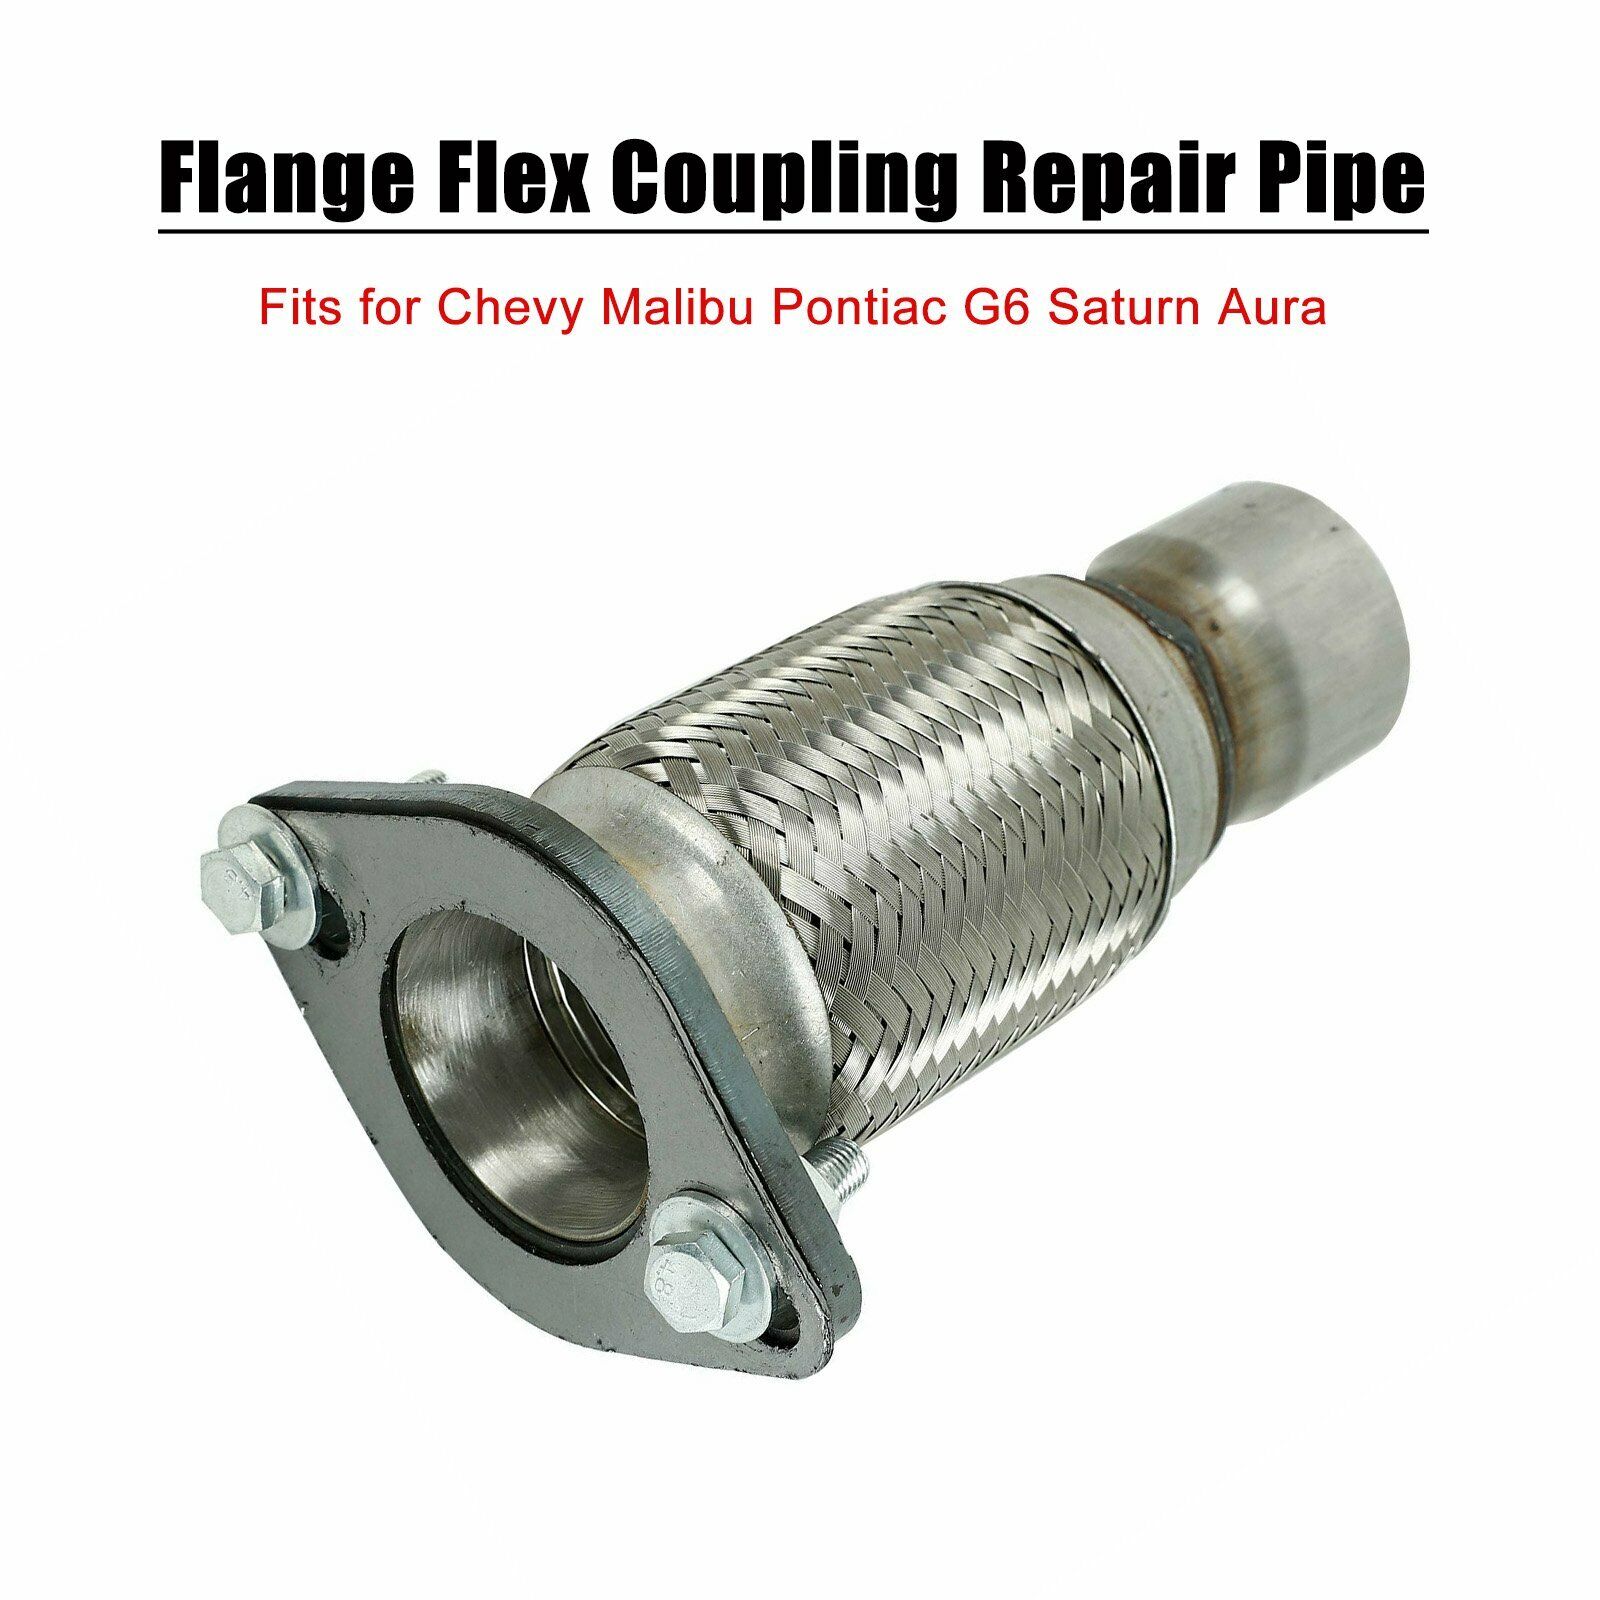 New Flange Flex Coupling Repair Pipe for Chevrolet Malibu; Pontiac G6; Saturn